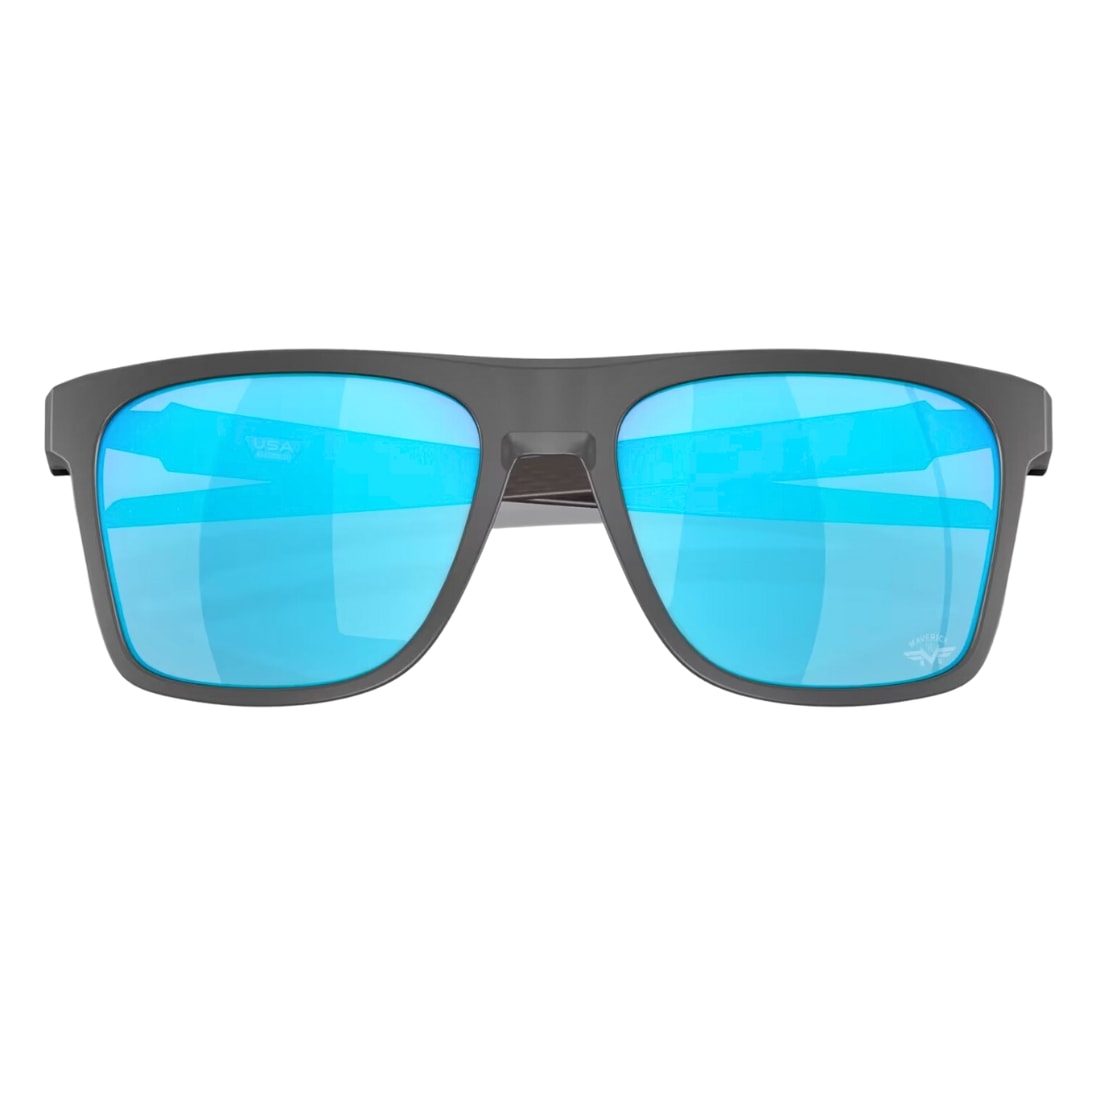 Oakley Sunglasses for sale in Mountain Home, Idaho | Facebook Marketplace |  Facebook